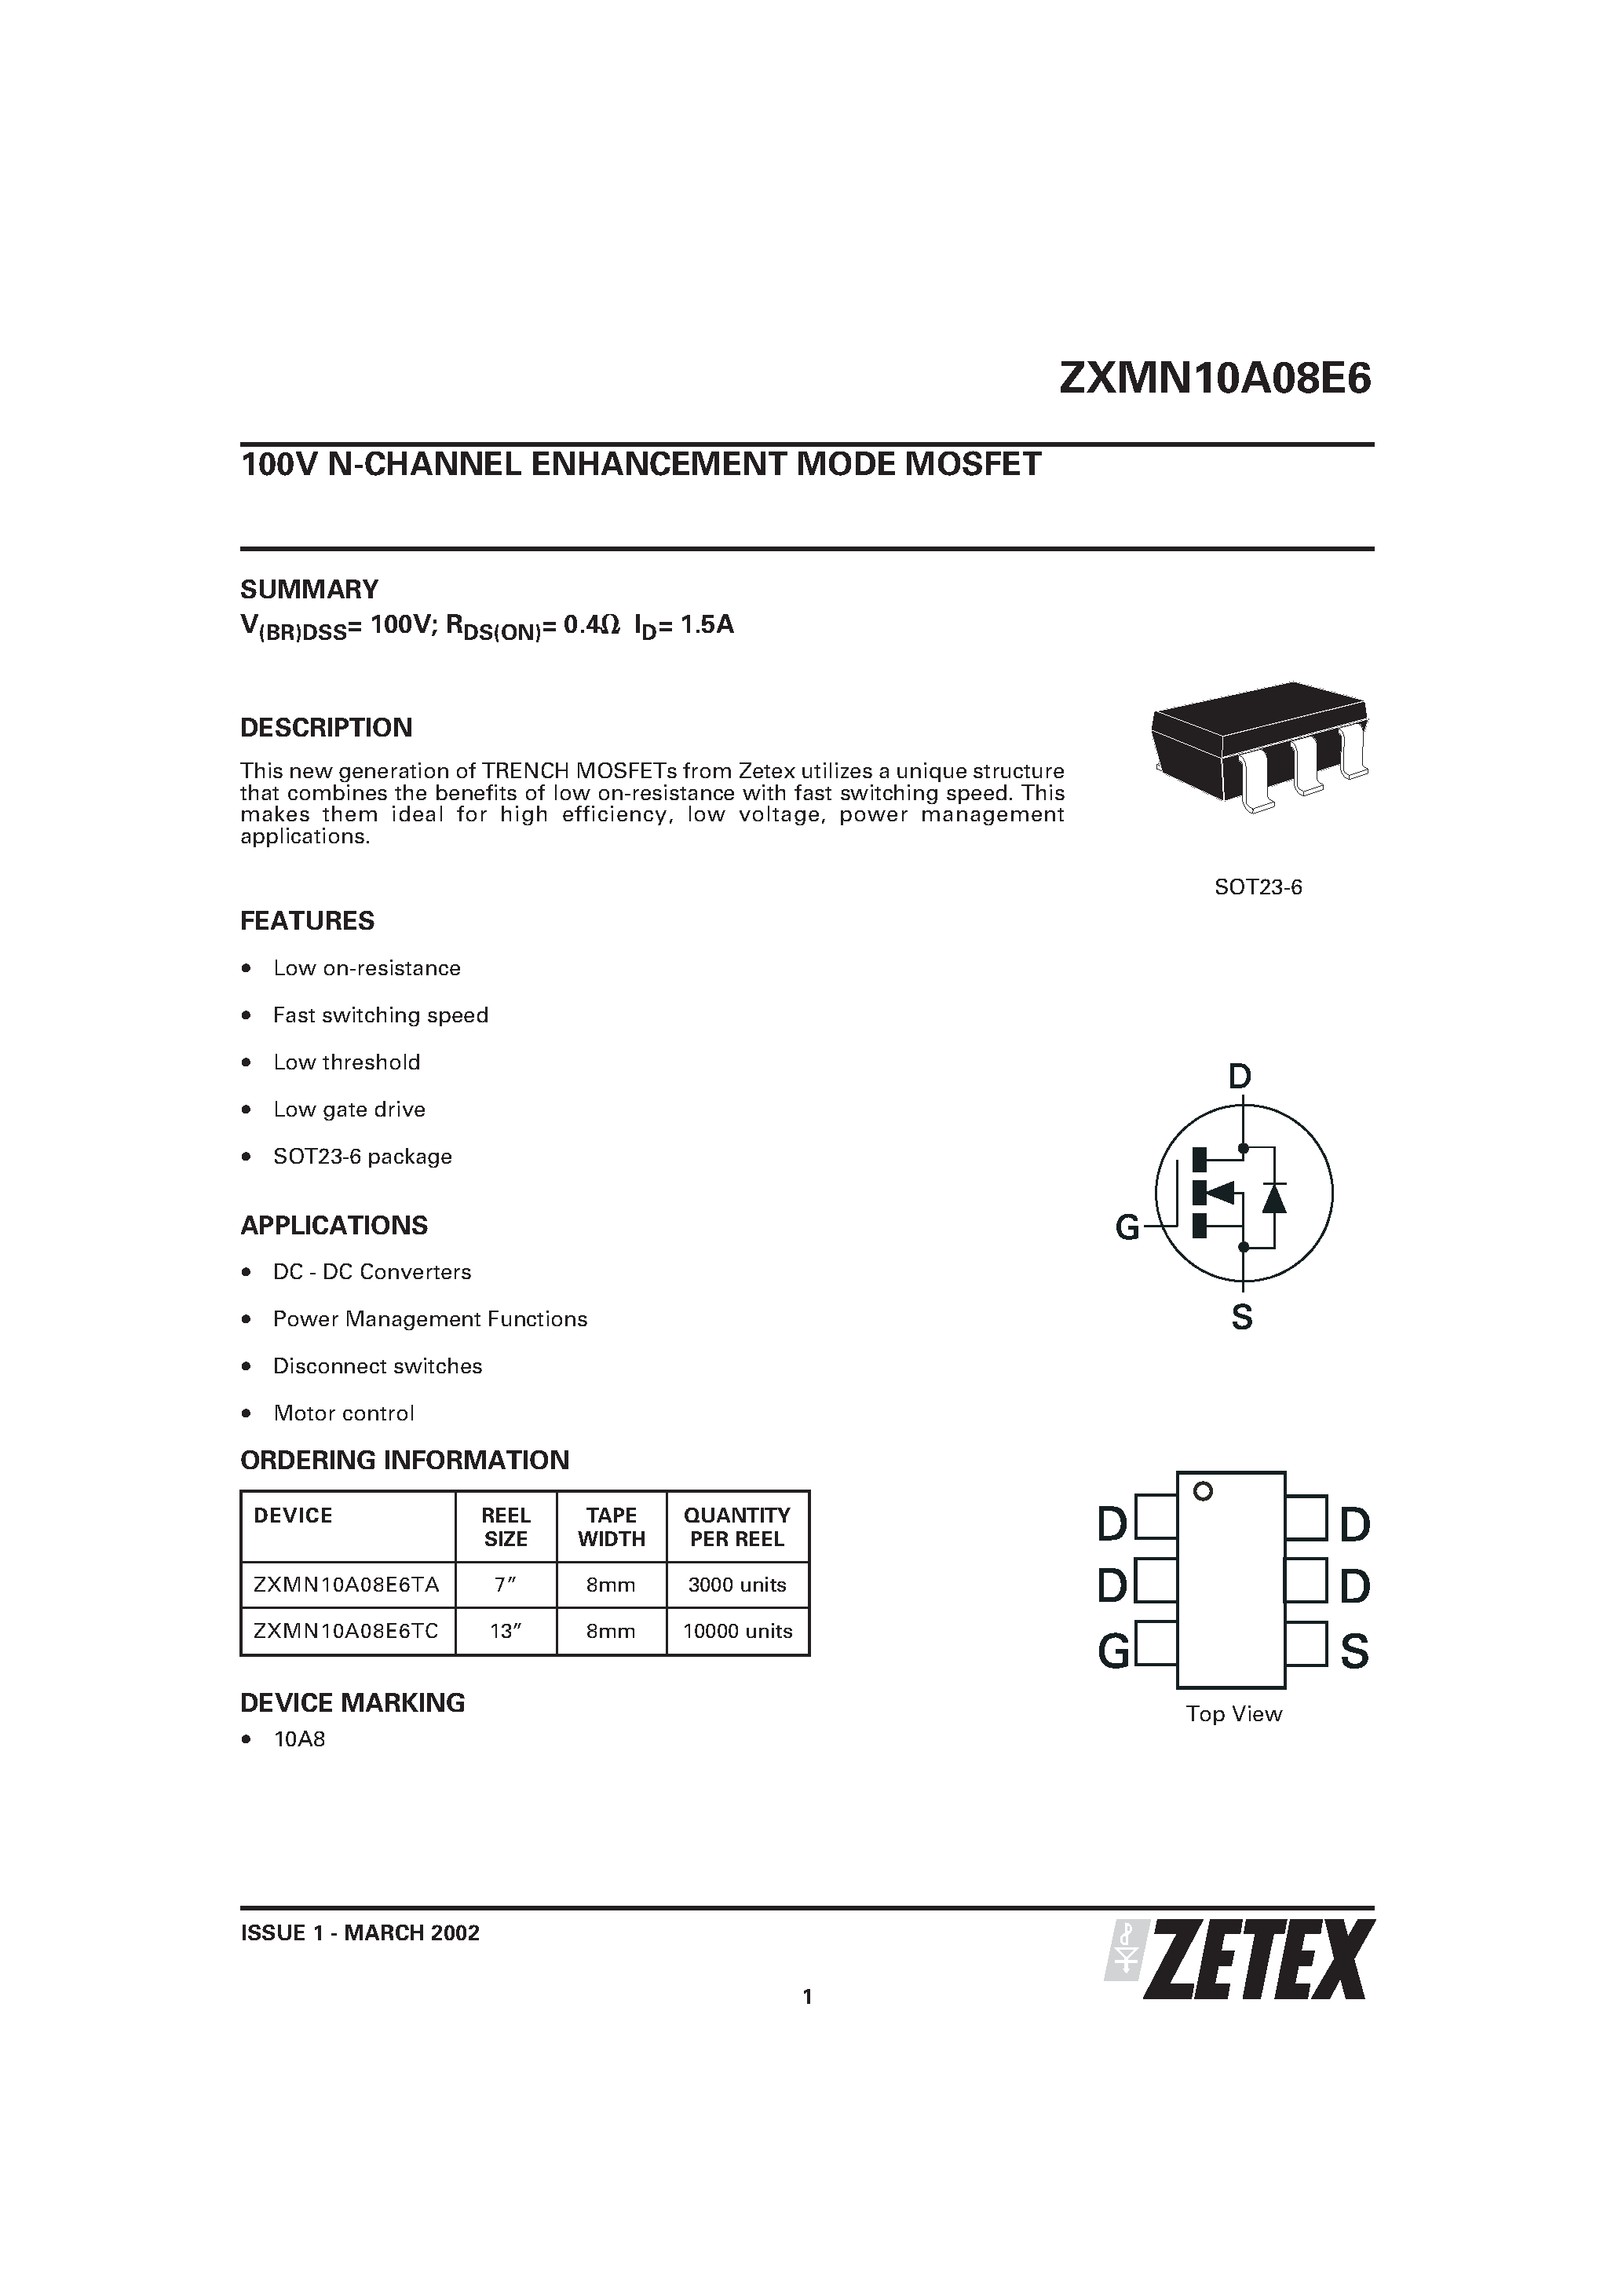 Datasheet ZXMN10A08E6 - 100V N-CHANNEL ENHANCEMENT MODE MOSFET page 1